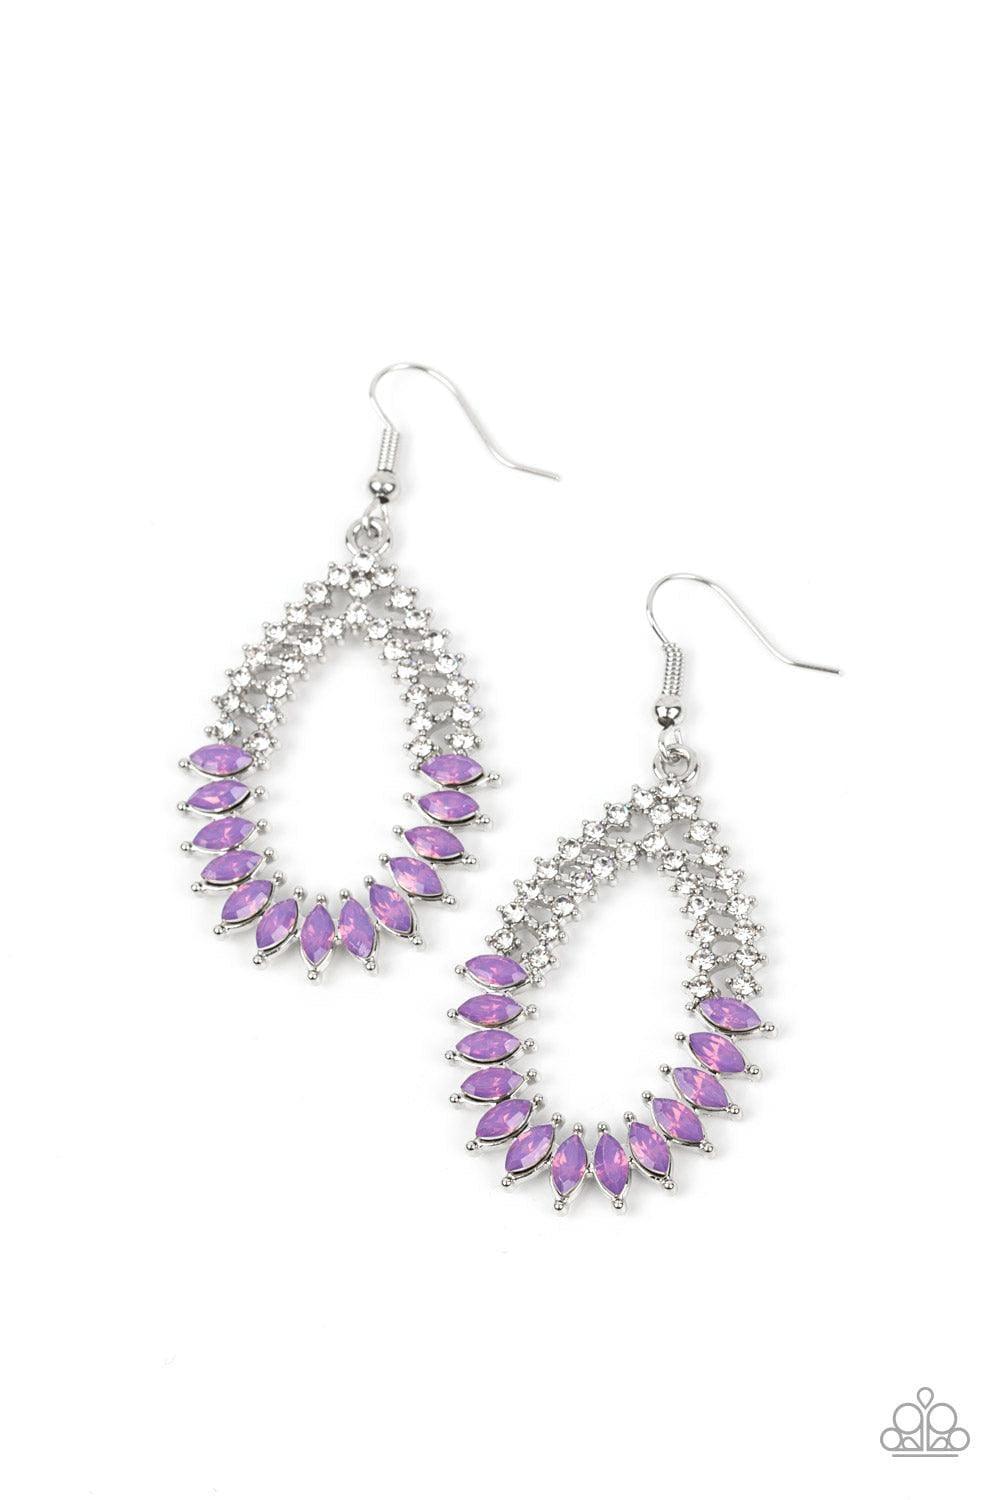 Paparazzi Accessories - Lucid Luster - Purple Earrings - Bling by JessieK